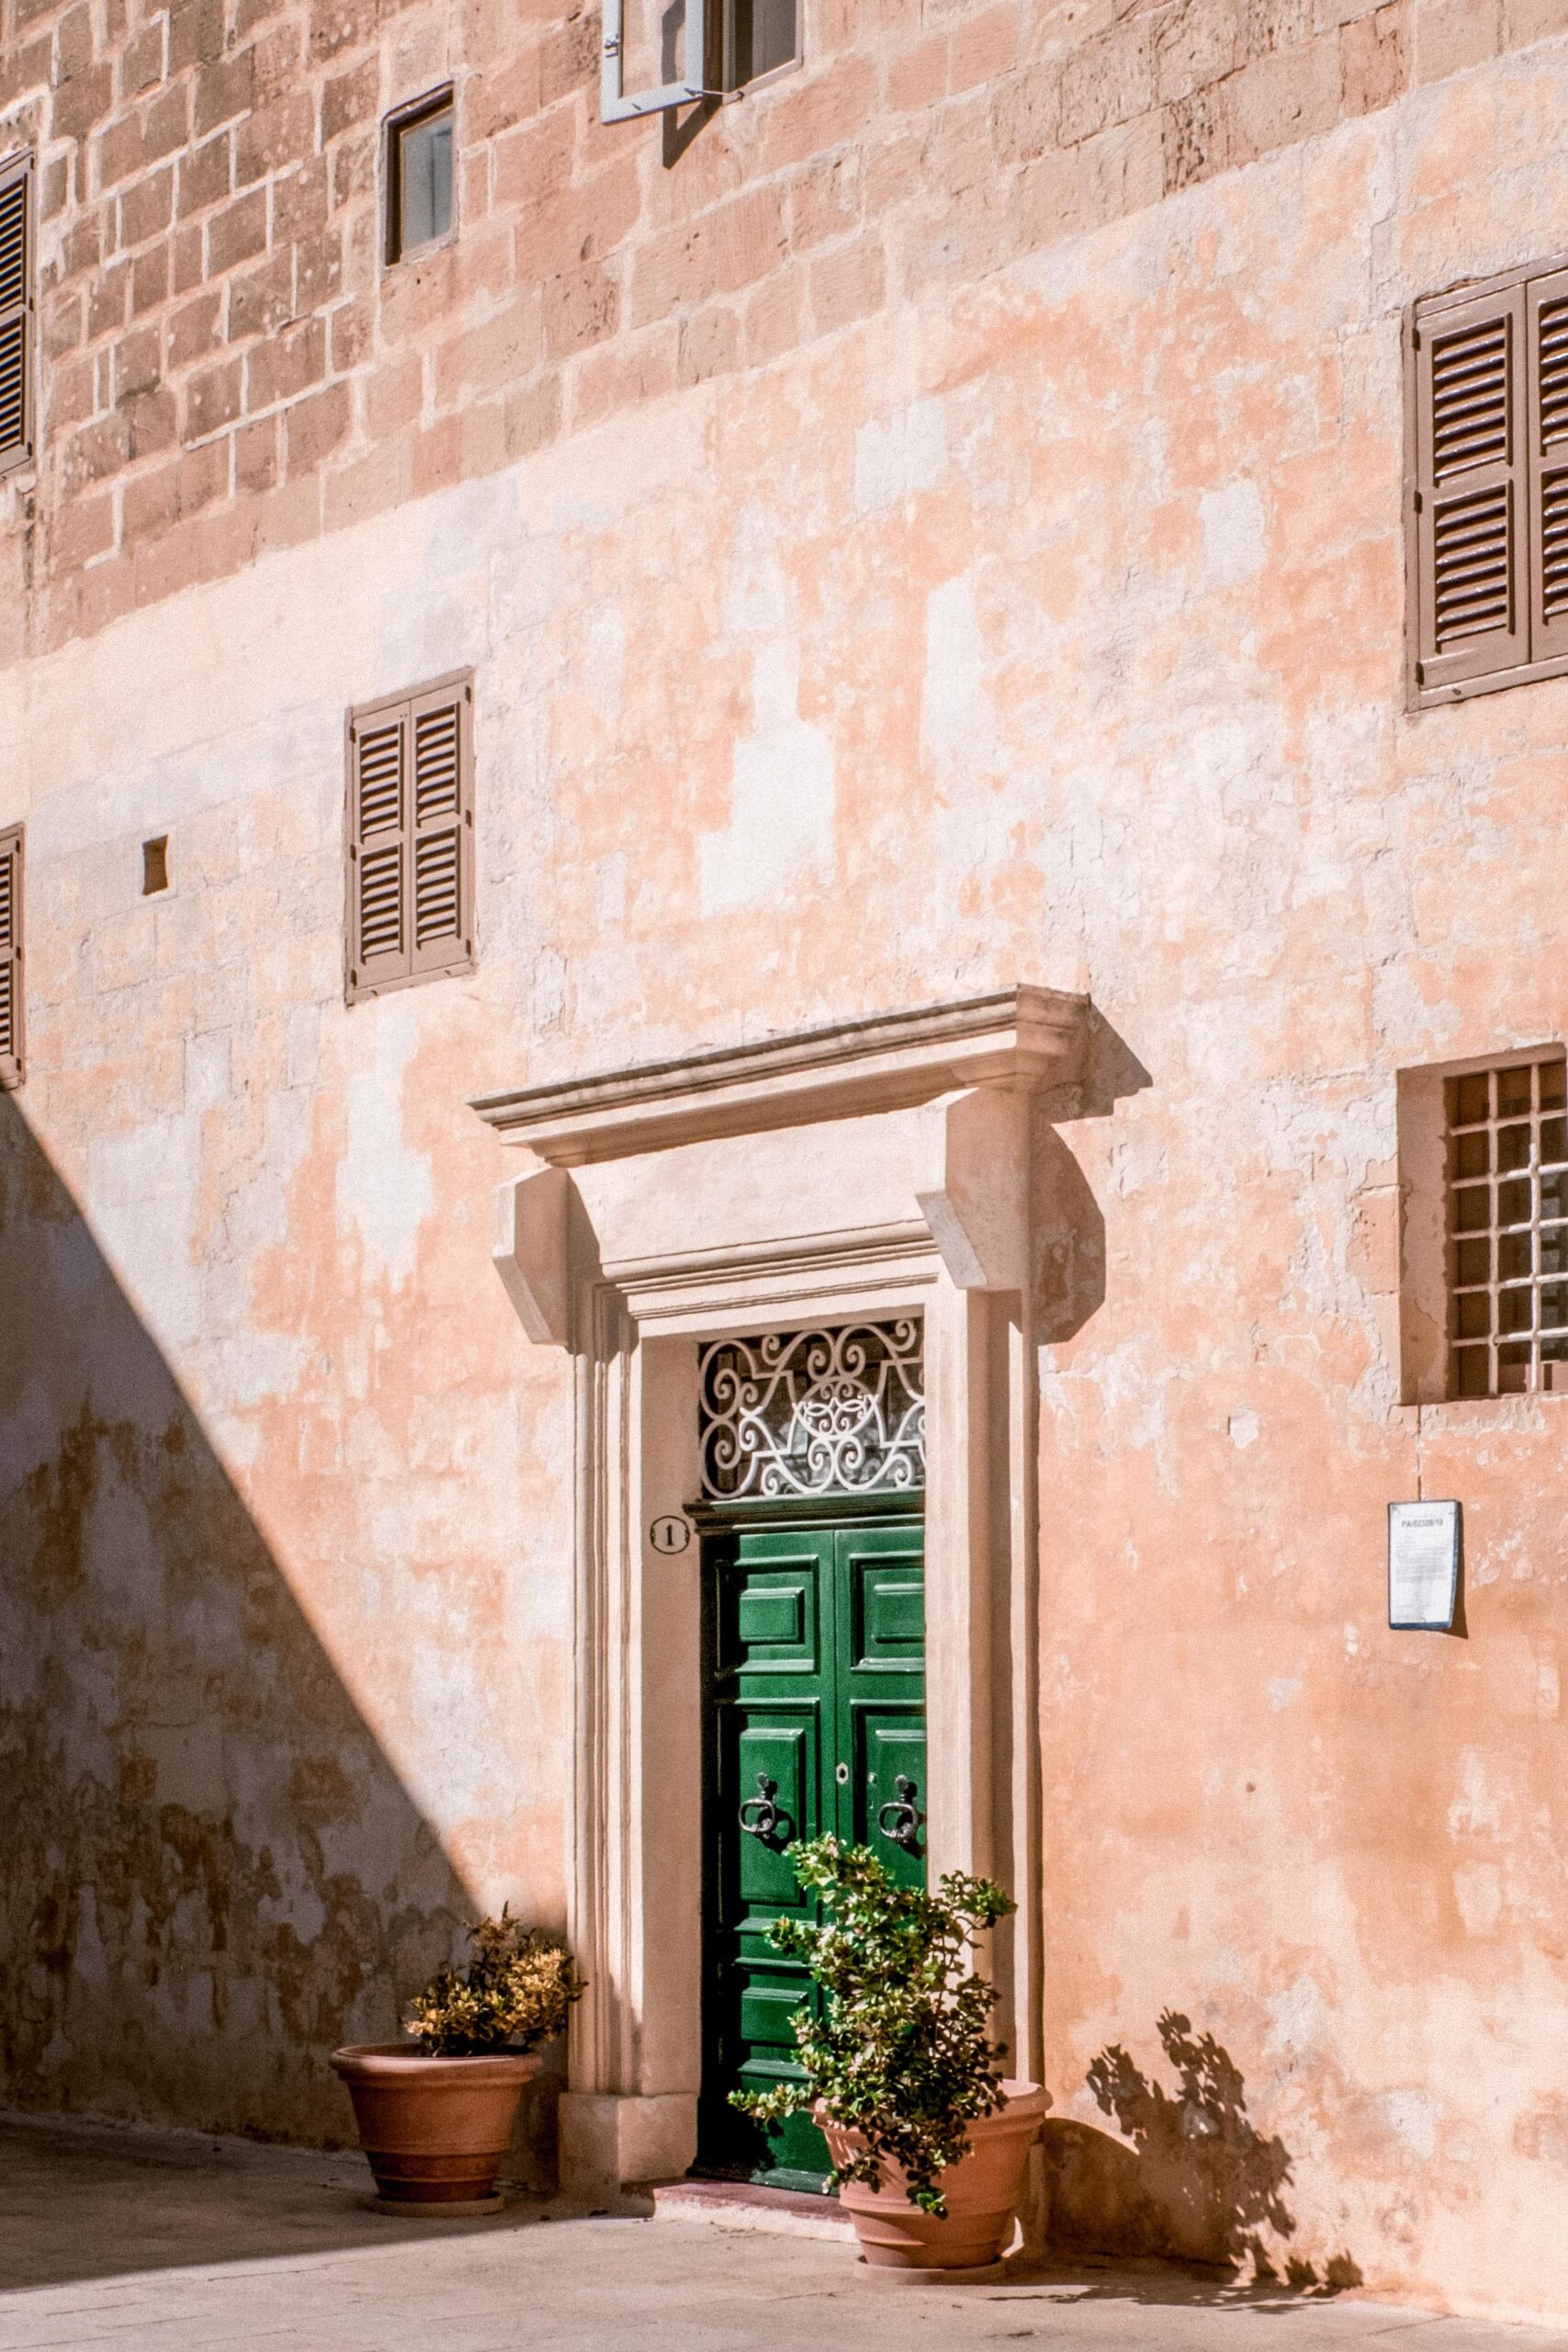 Green door in Triq San Nikola inside the old town of Mdina, Malta